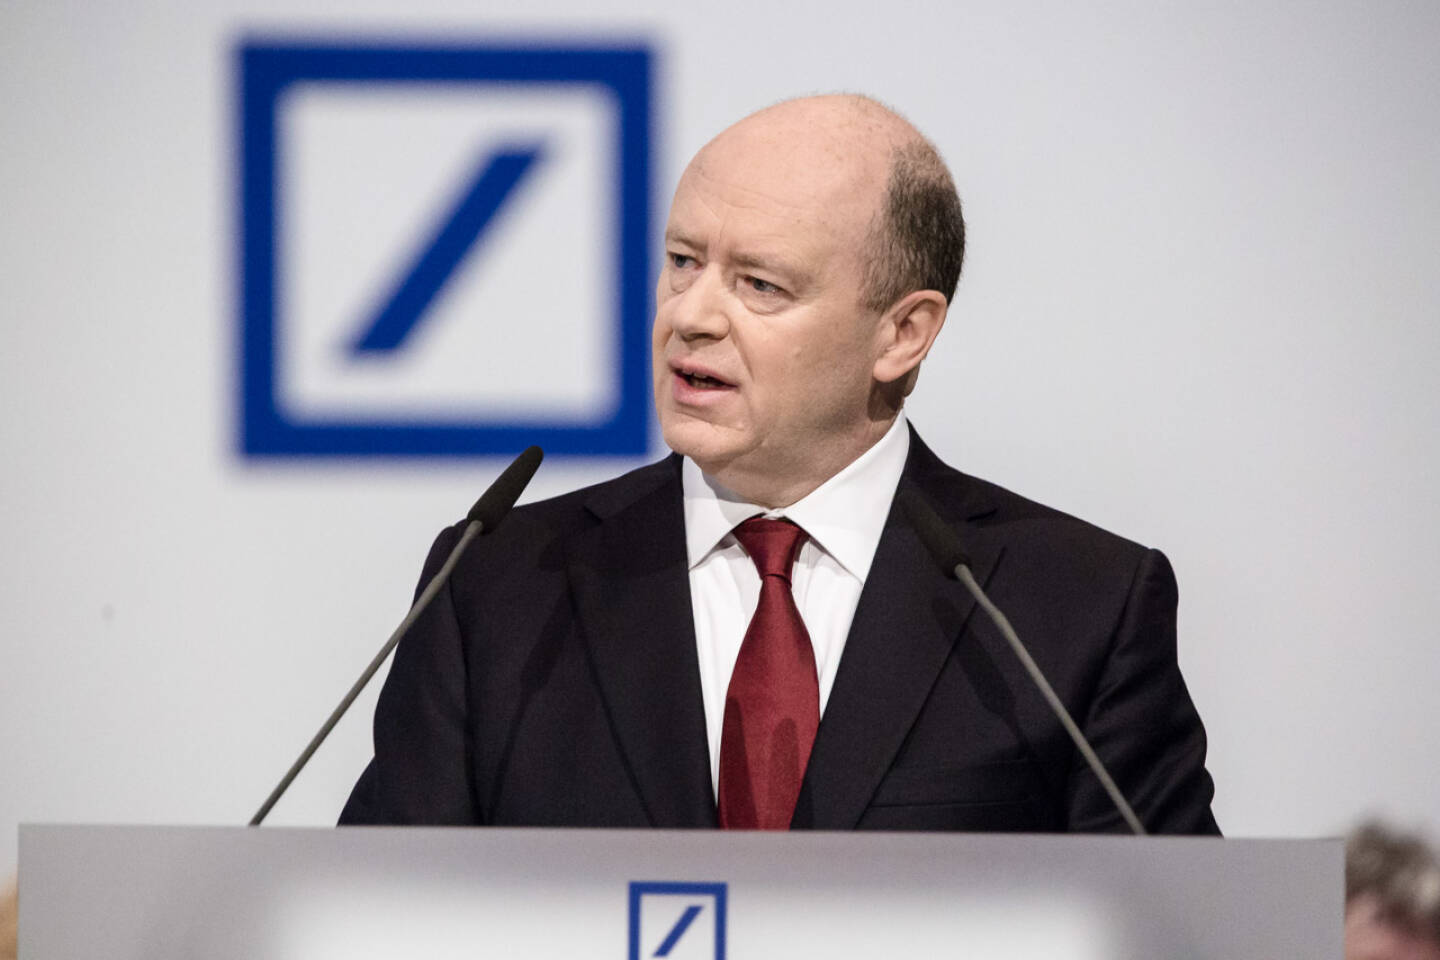 John Cryan, Hauptversammlung der Deutsche Bank, Credit: Mario Andreya